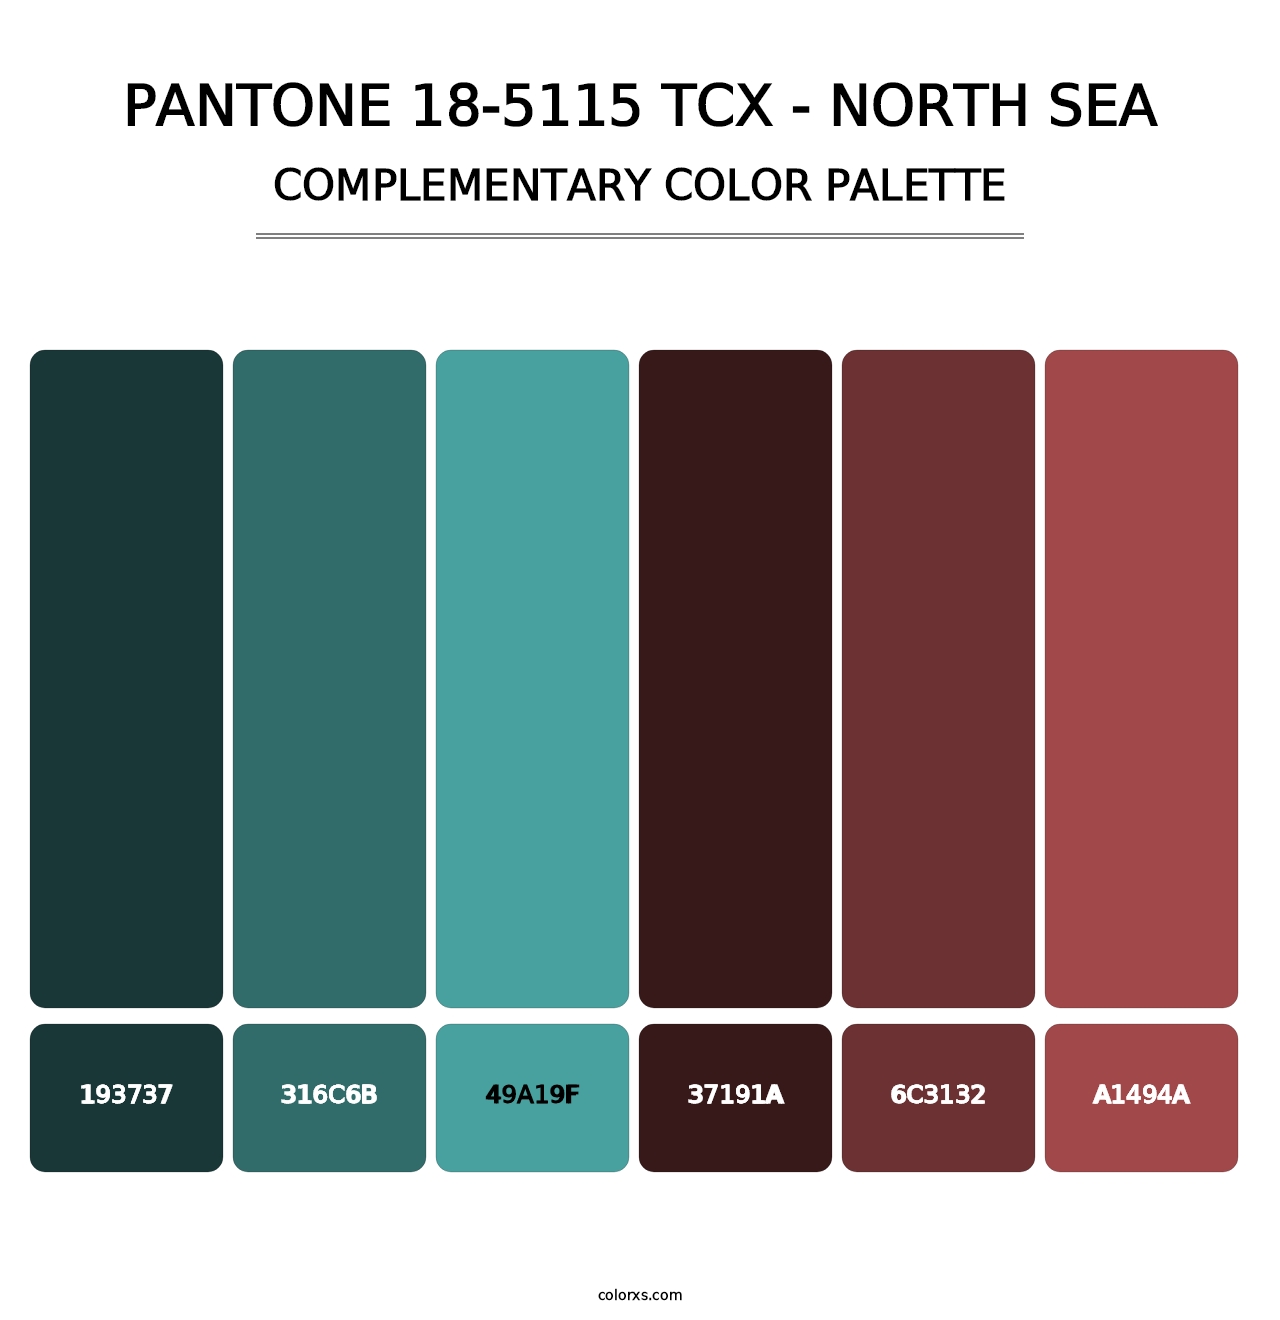 PANTONE 18-5115 TCX - North Sea - Complementary Color Palette